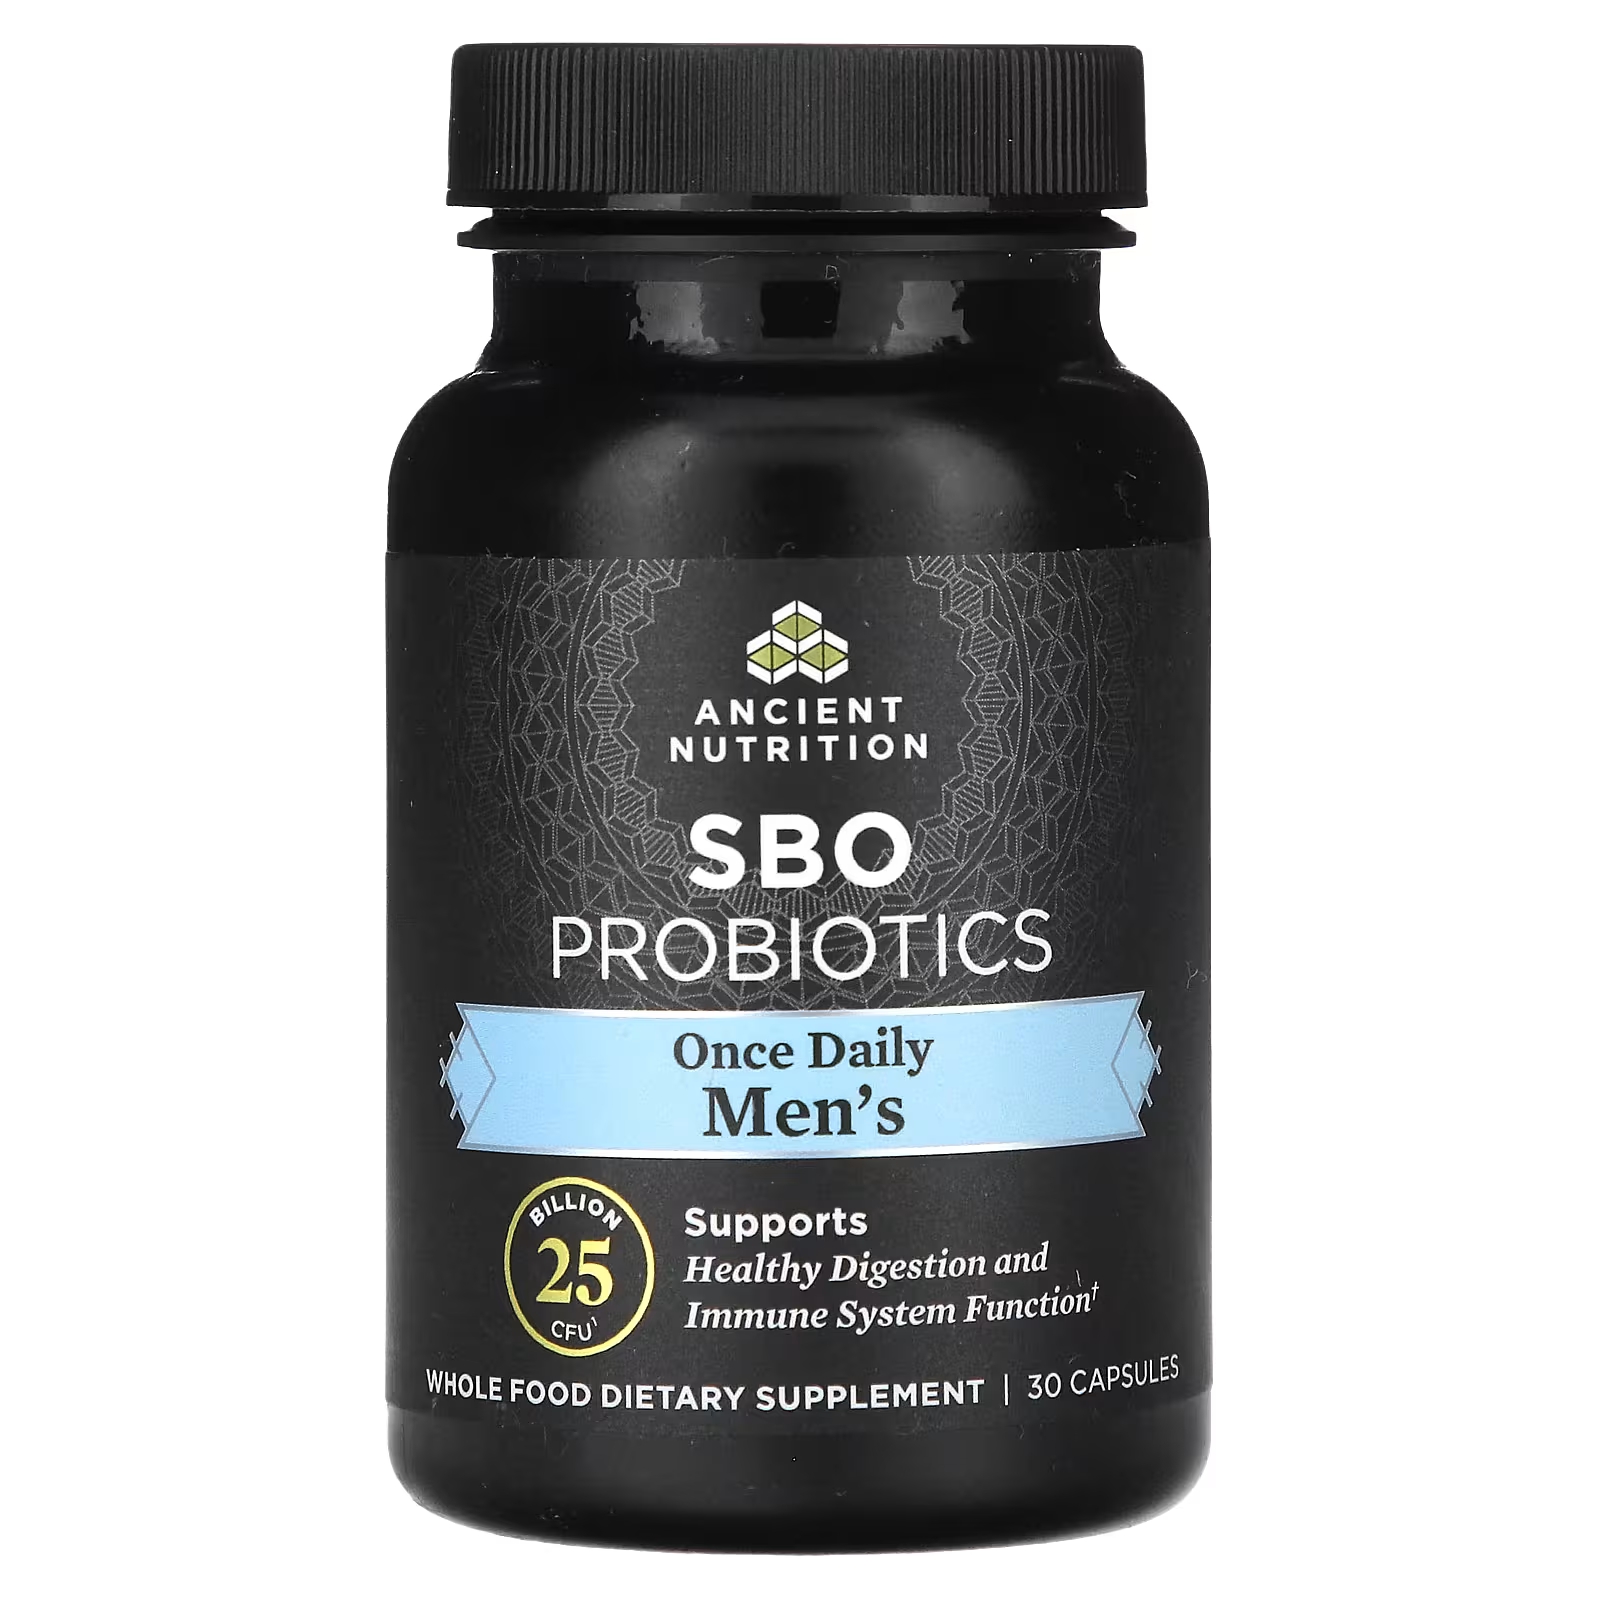 Пробиотики SBO для мужчин Ancient Nutrition, 25 миллиардов КОЕ, 30 капсул